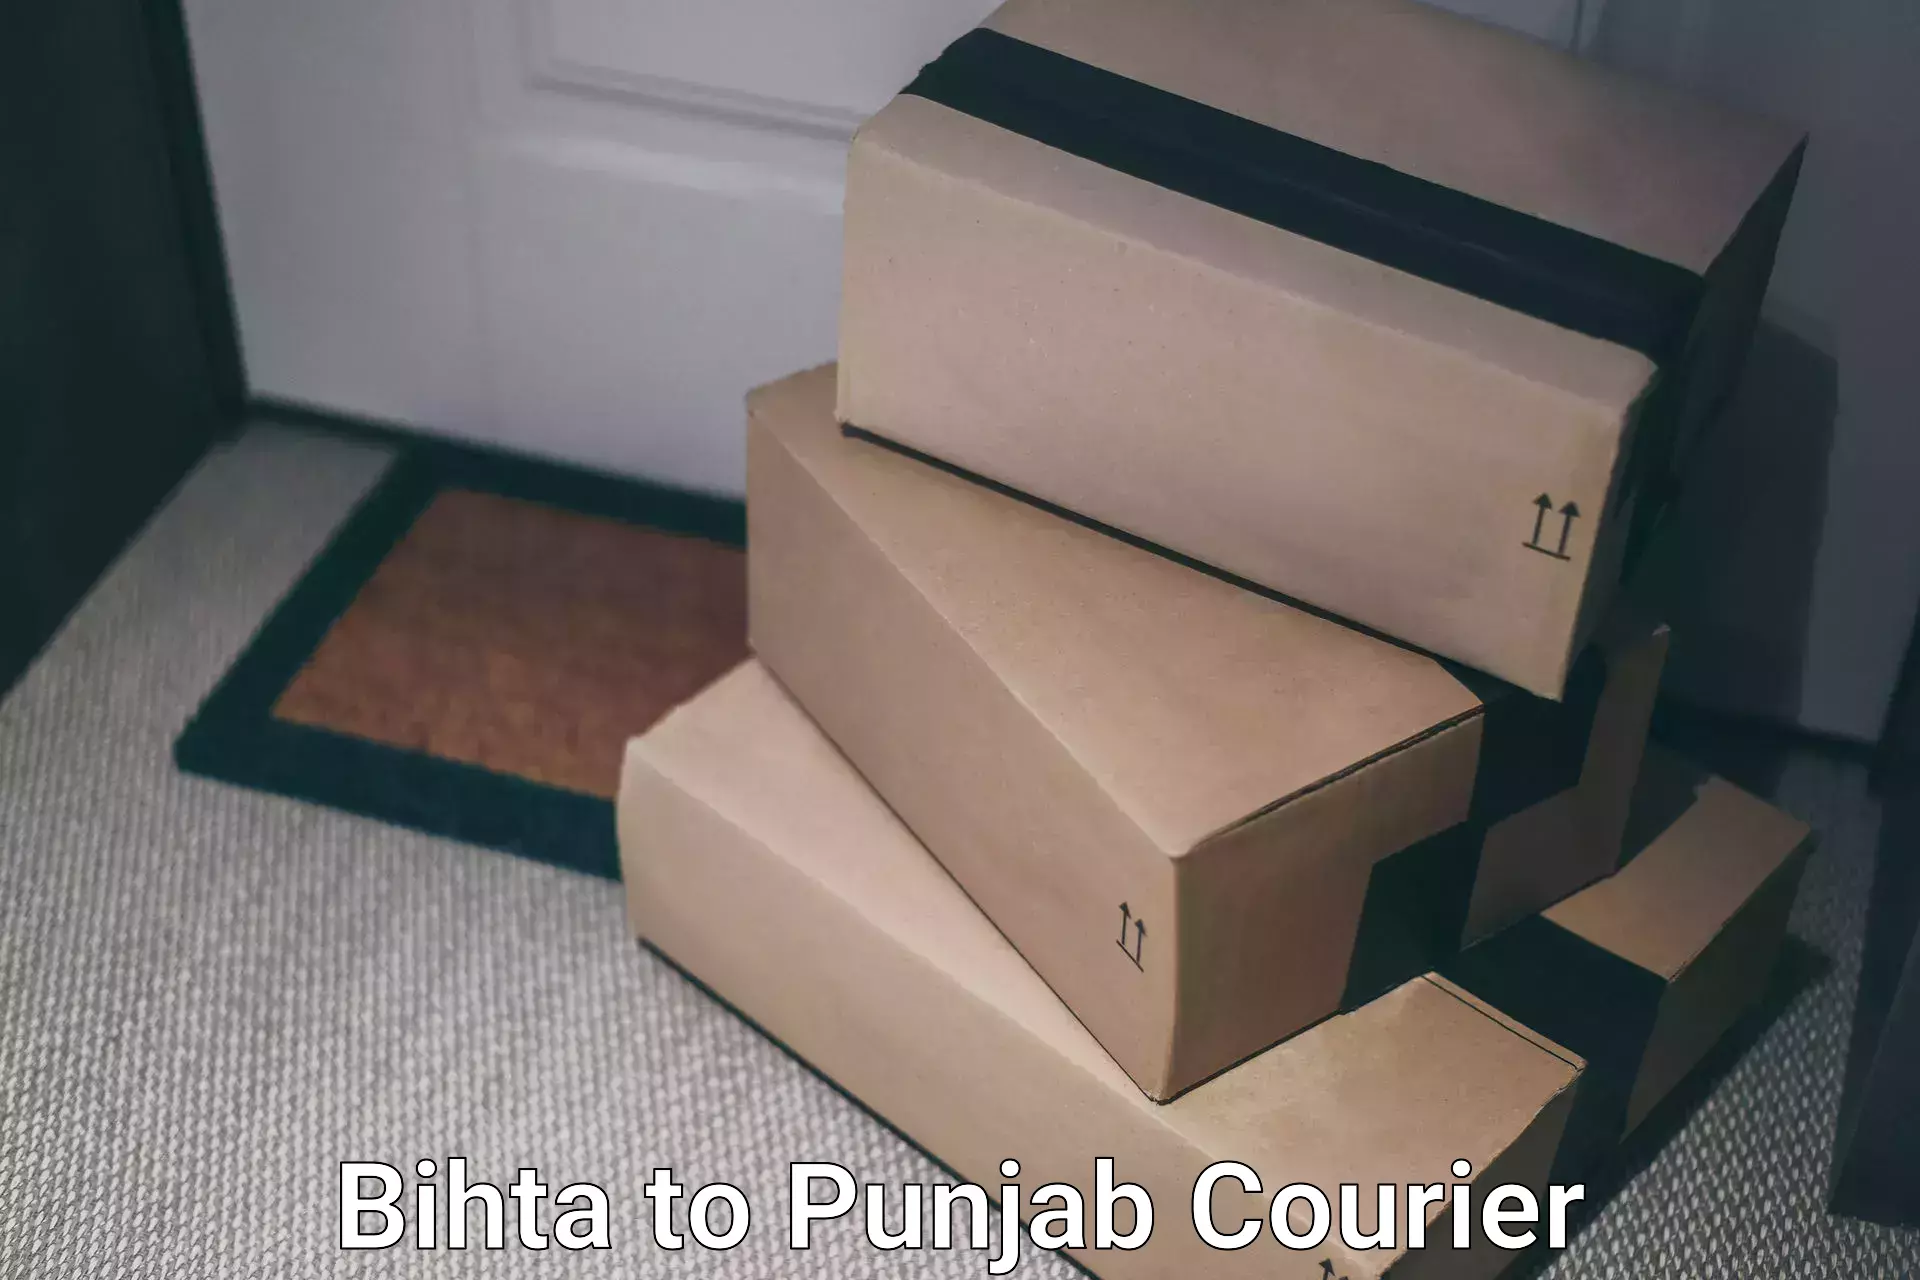 Courier service comparison Bihta to Punjab